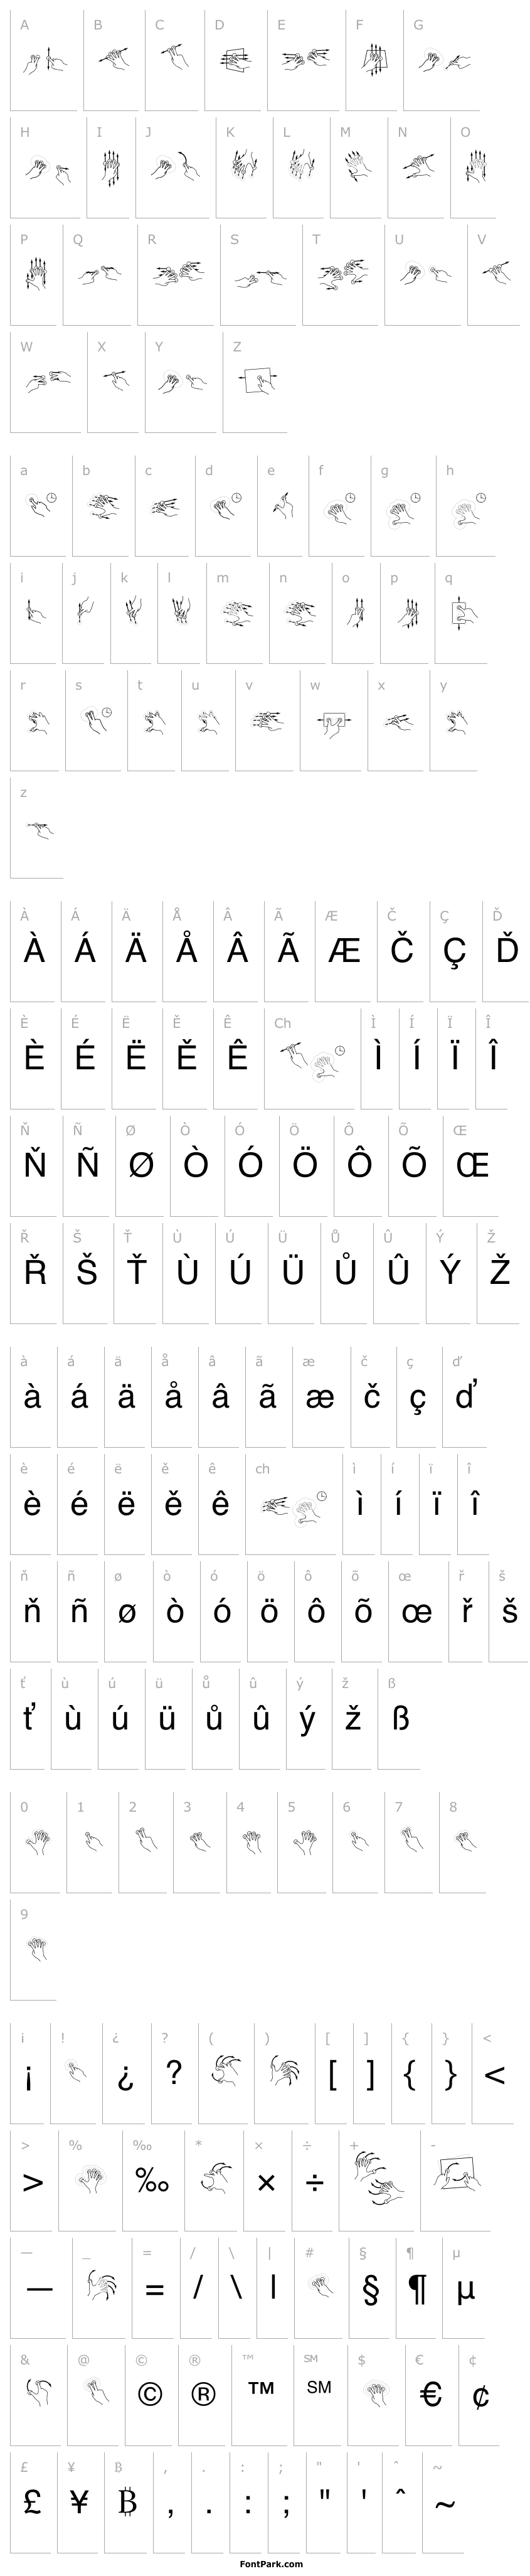 Overview Gesture-Glyphs